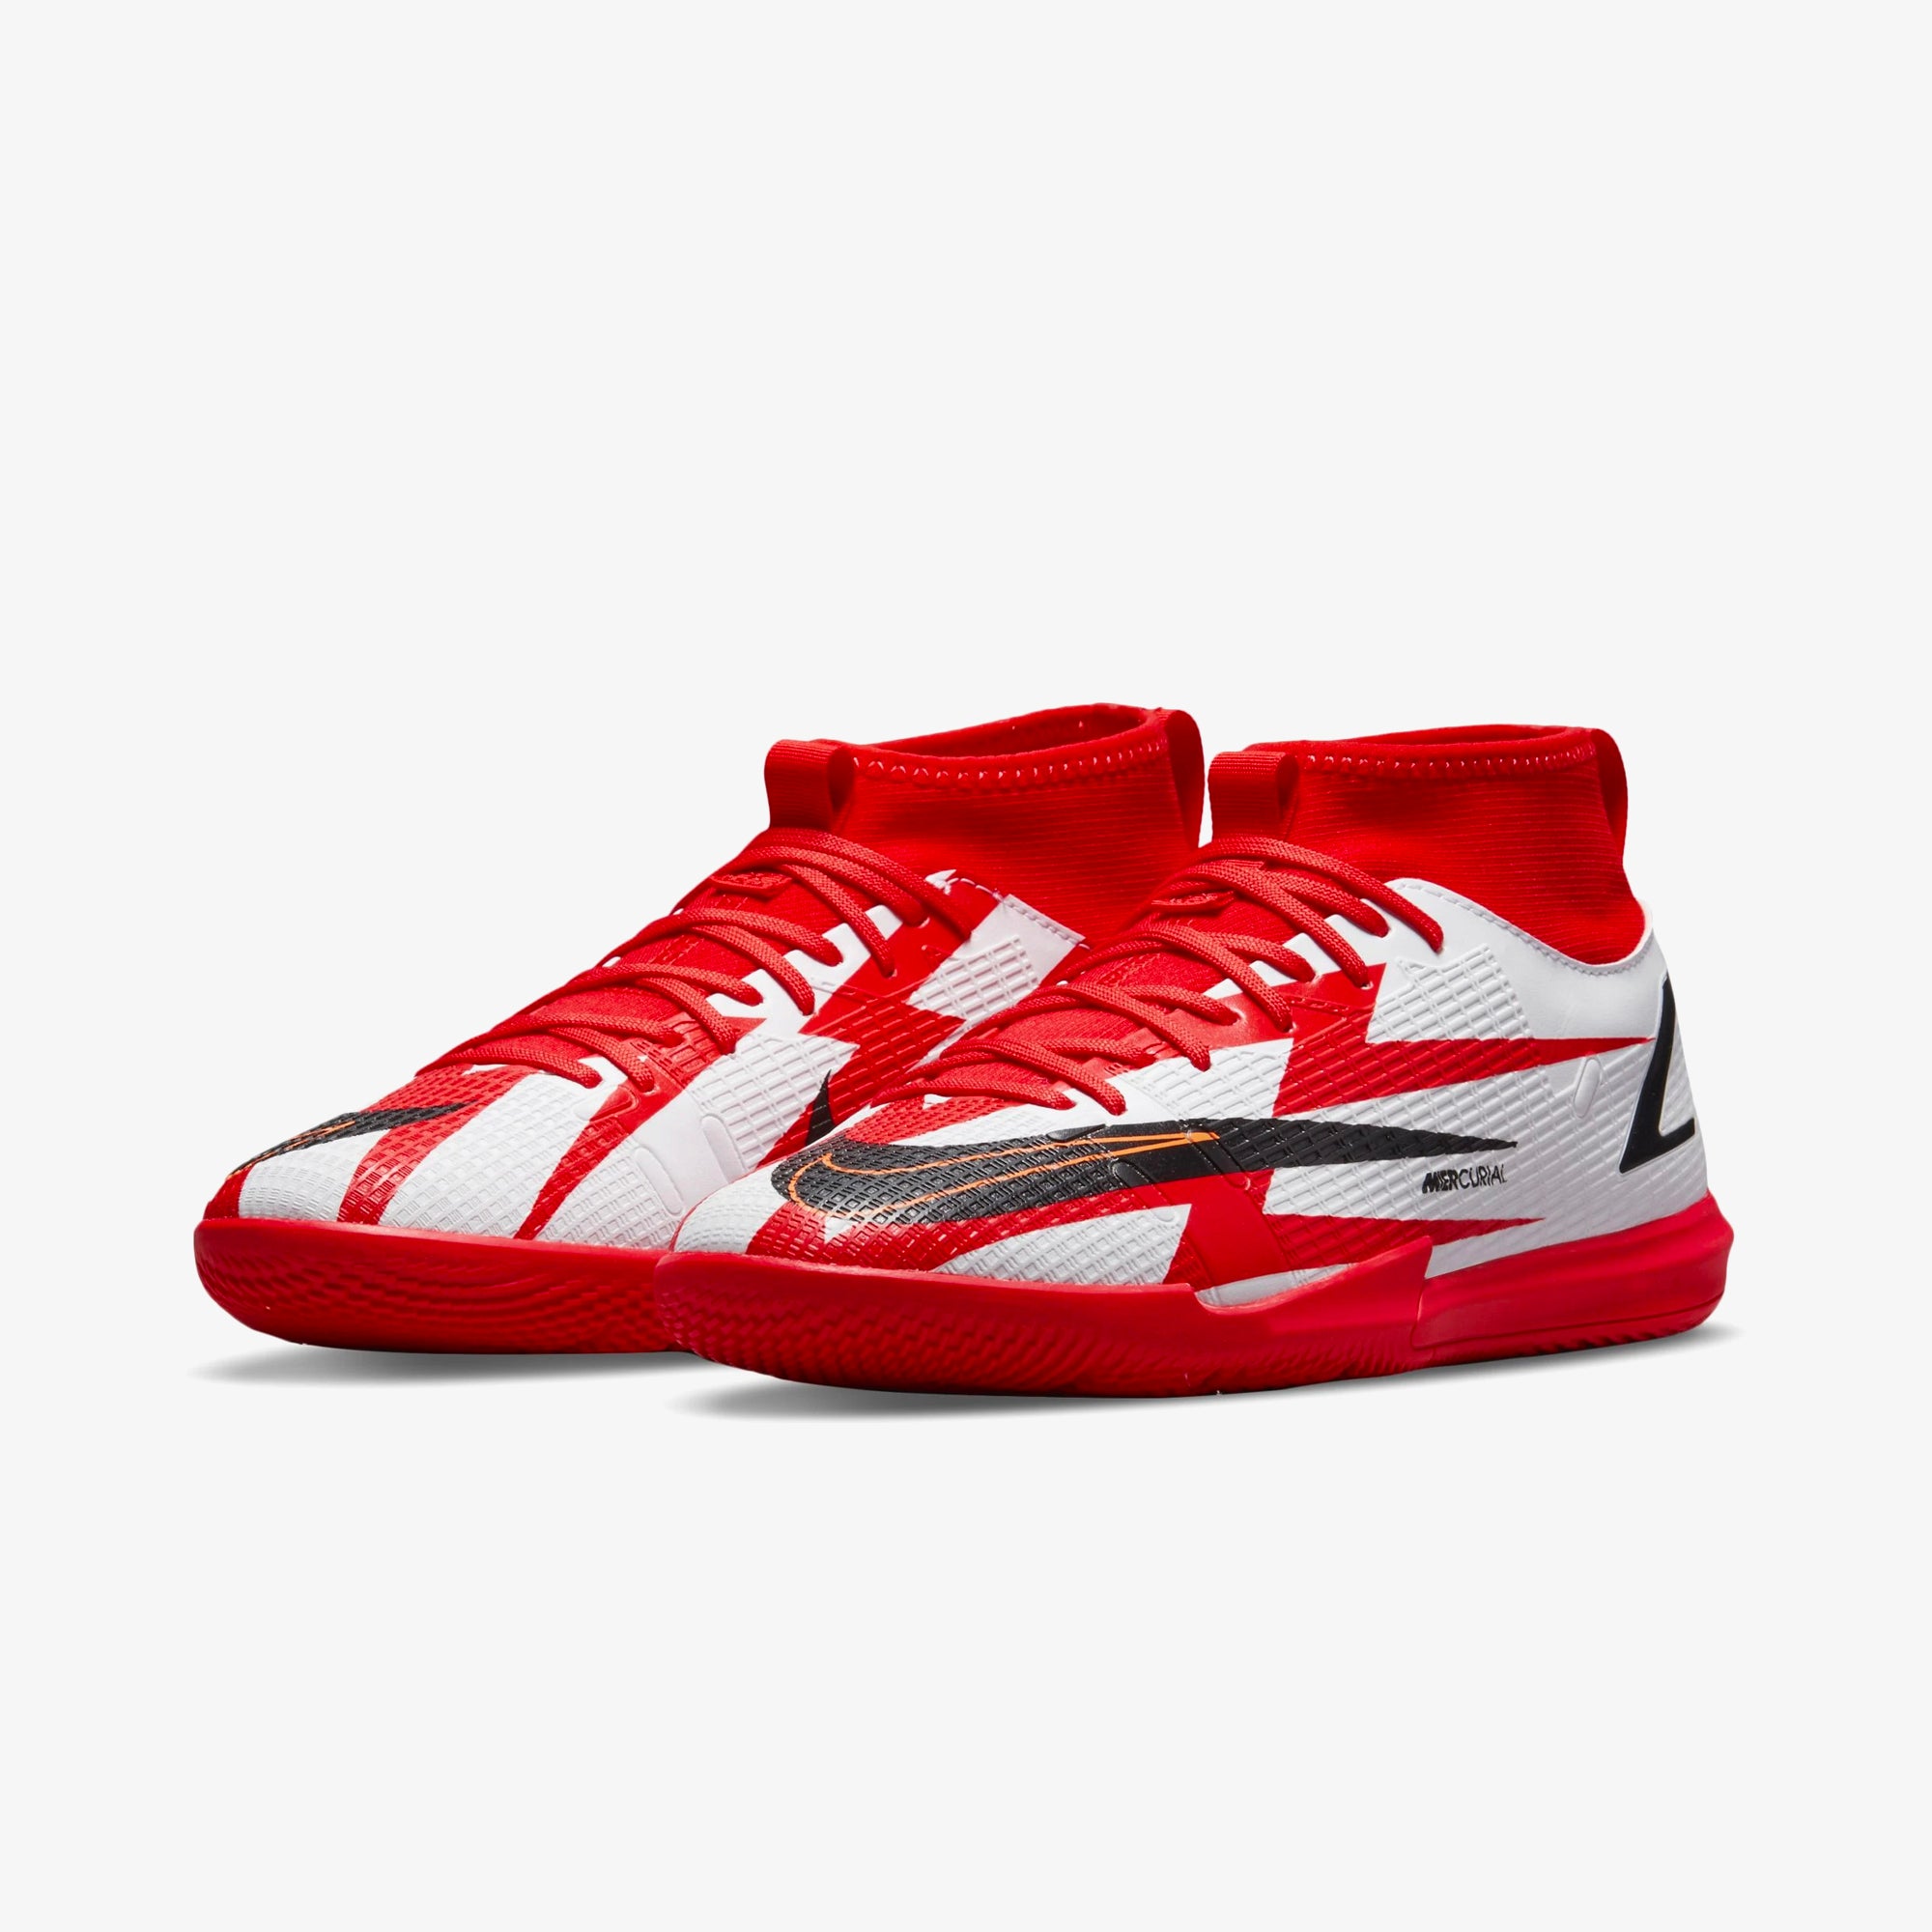 Nike Chaussures Football Salle Mercurial Superfly VIII Academy CR7